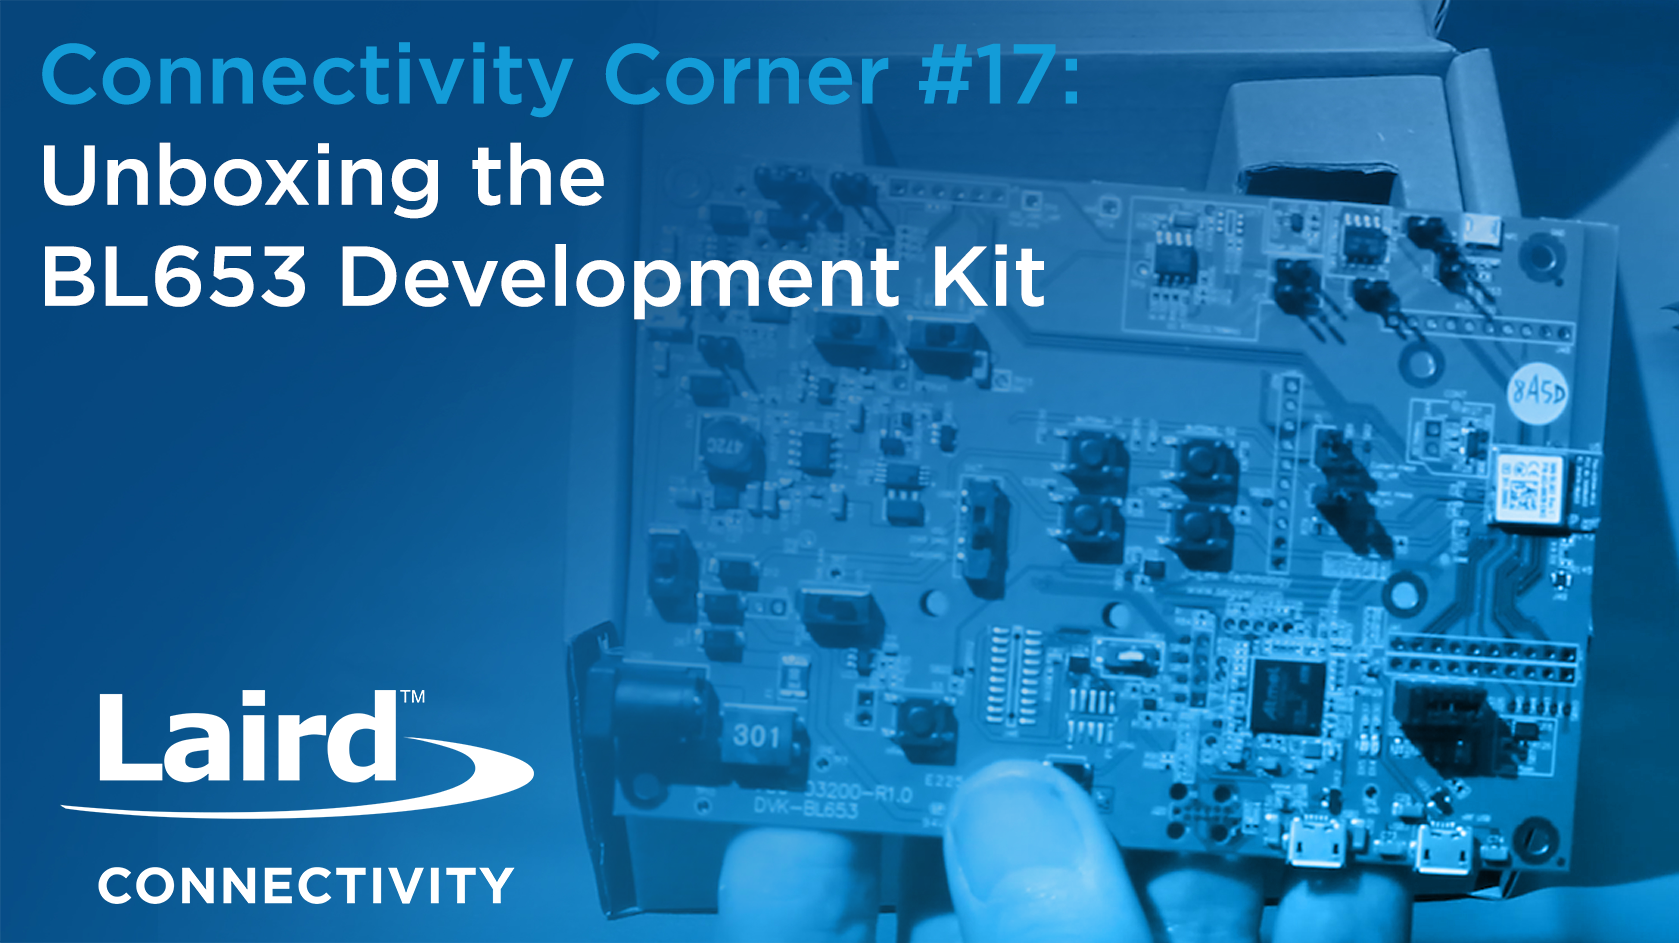 Episode 17: Unboxing the BL653 Development Kit